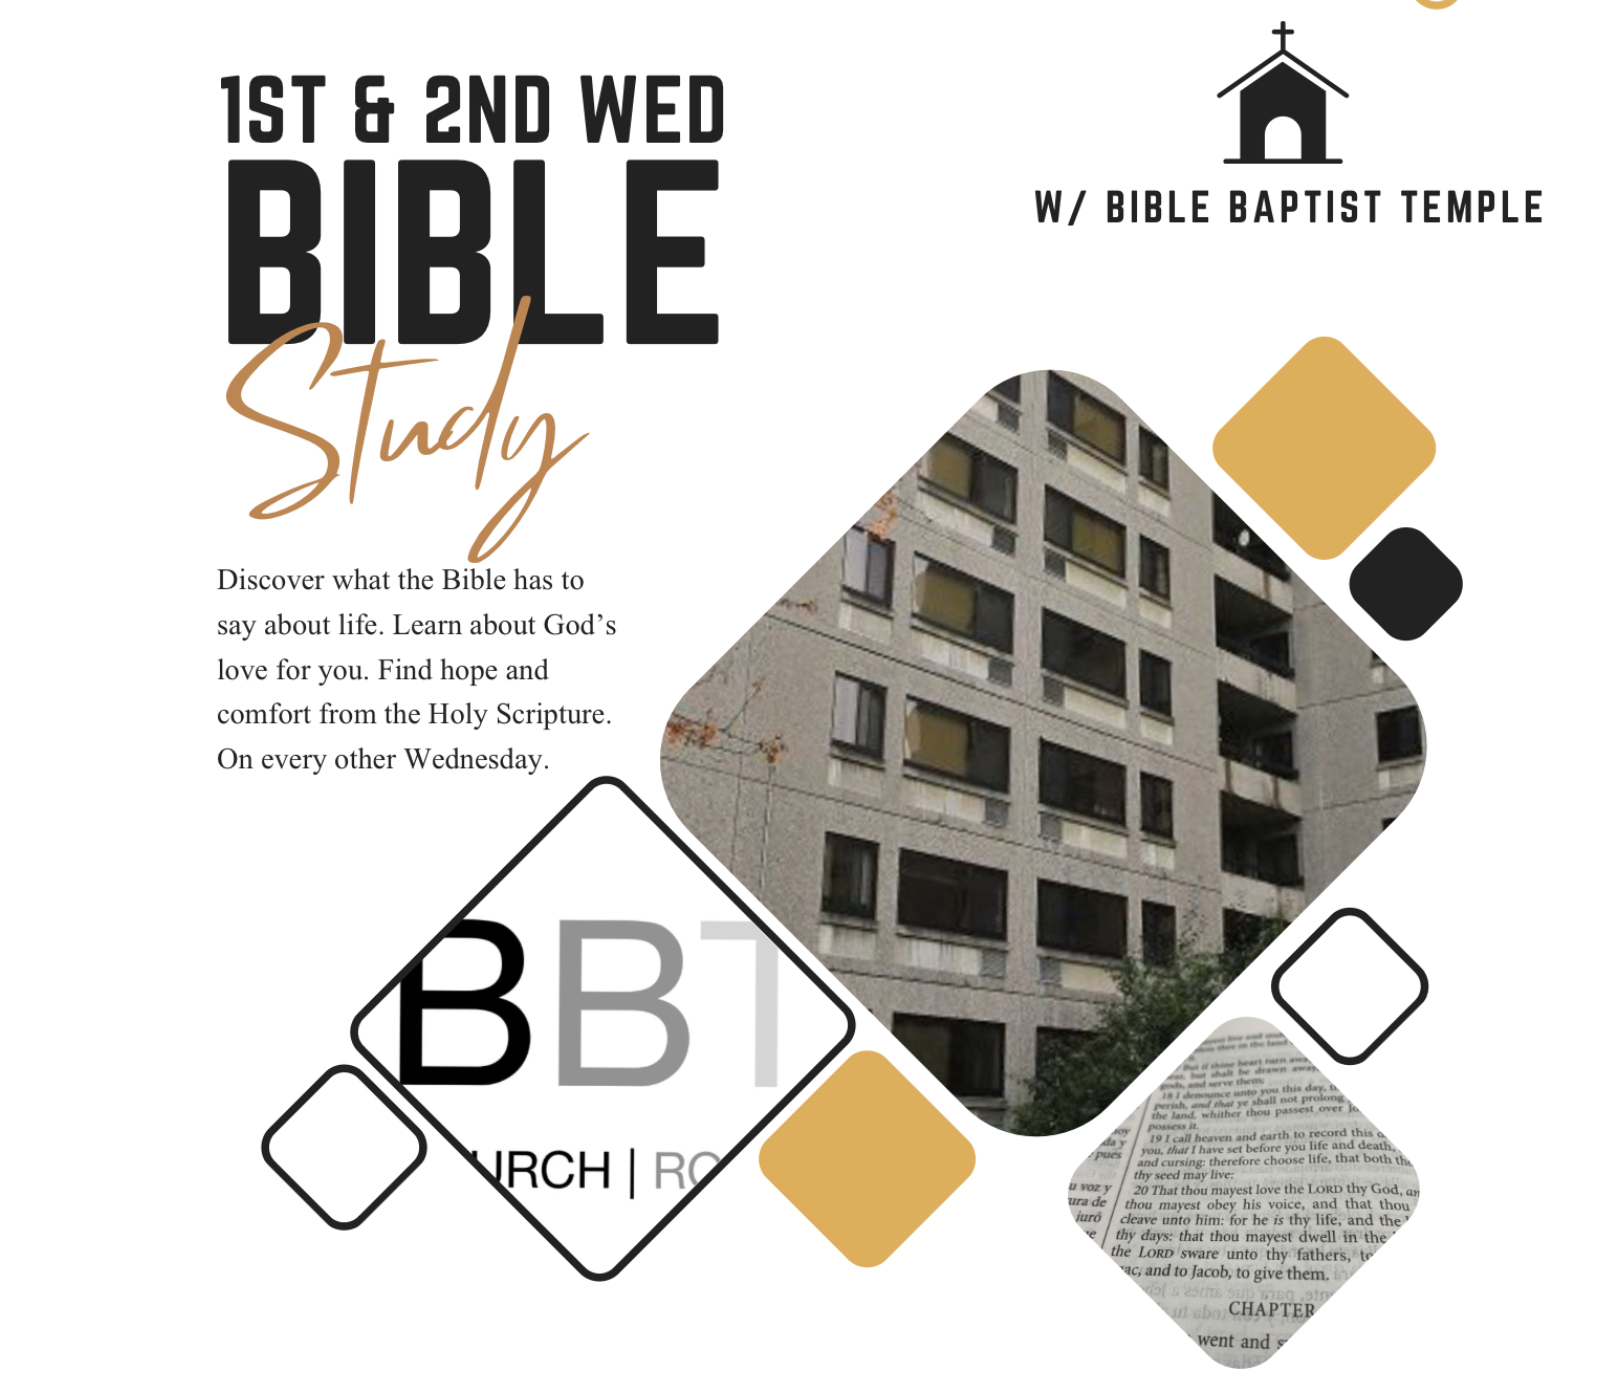 Wednesday Bible Study at Pinnacle Apartments